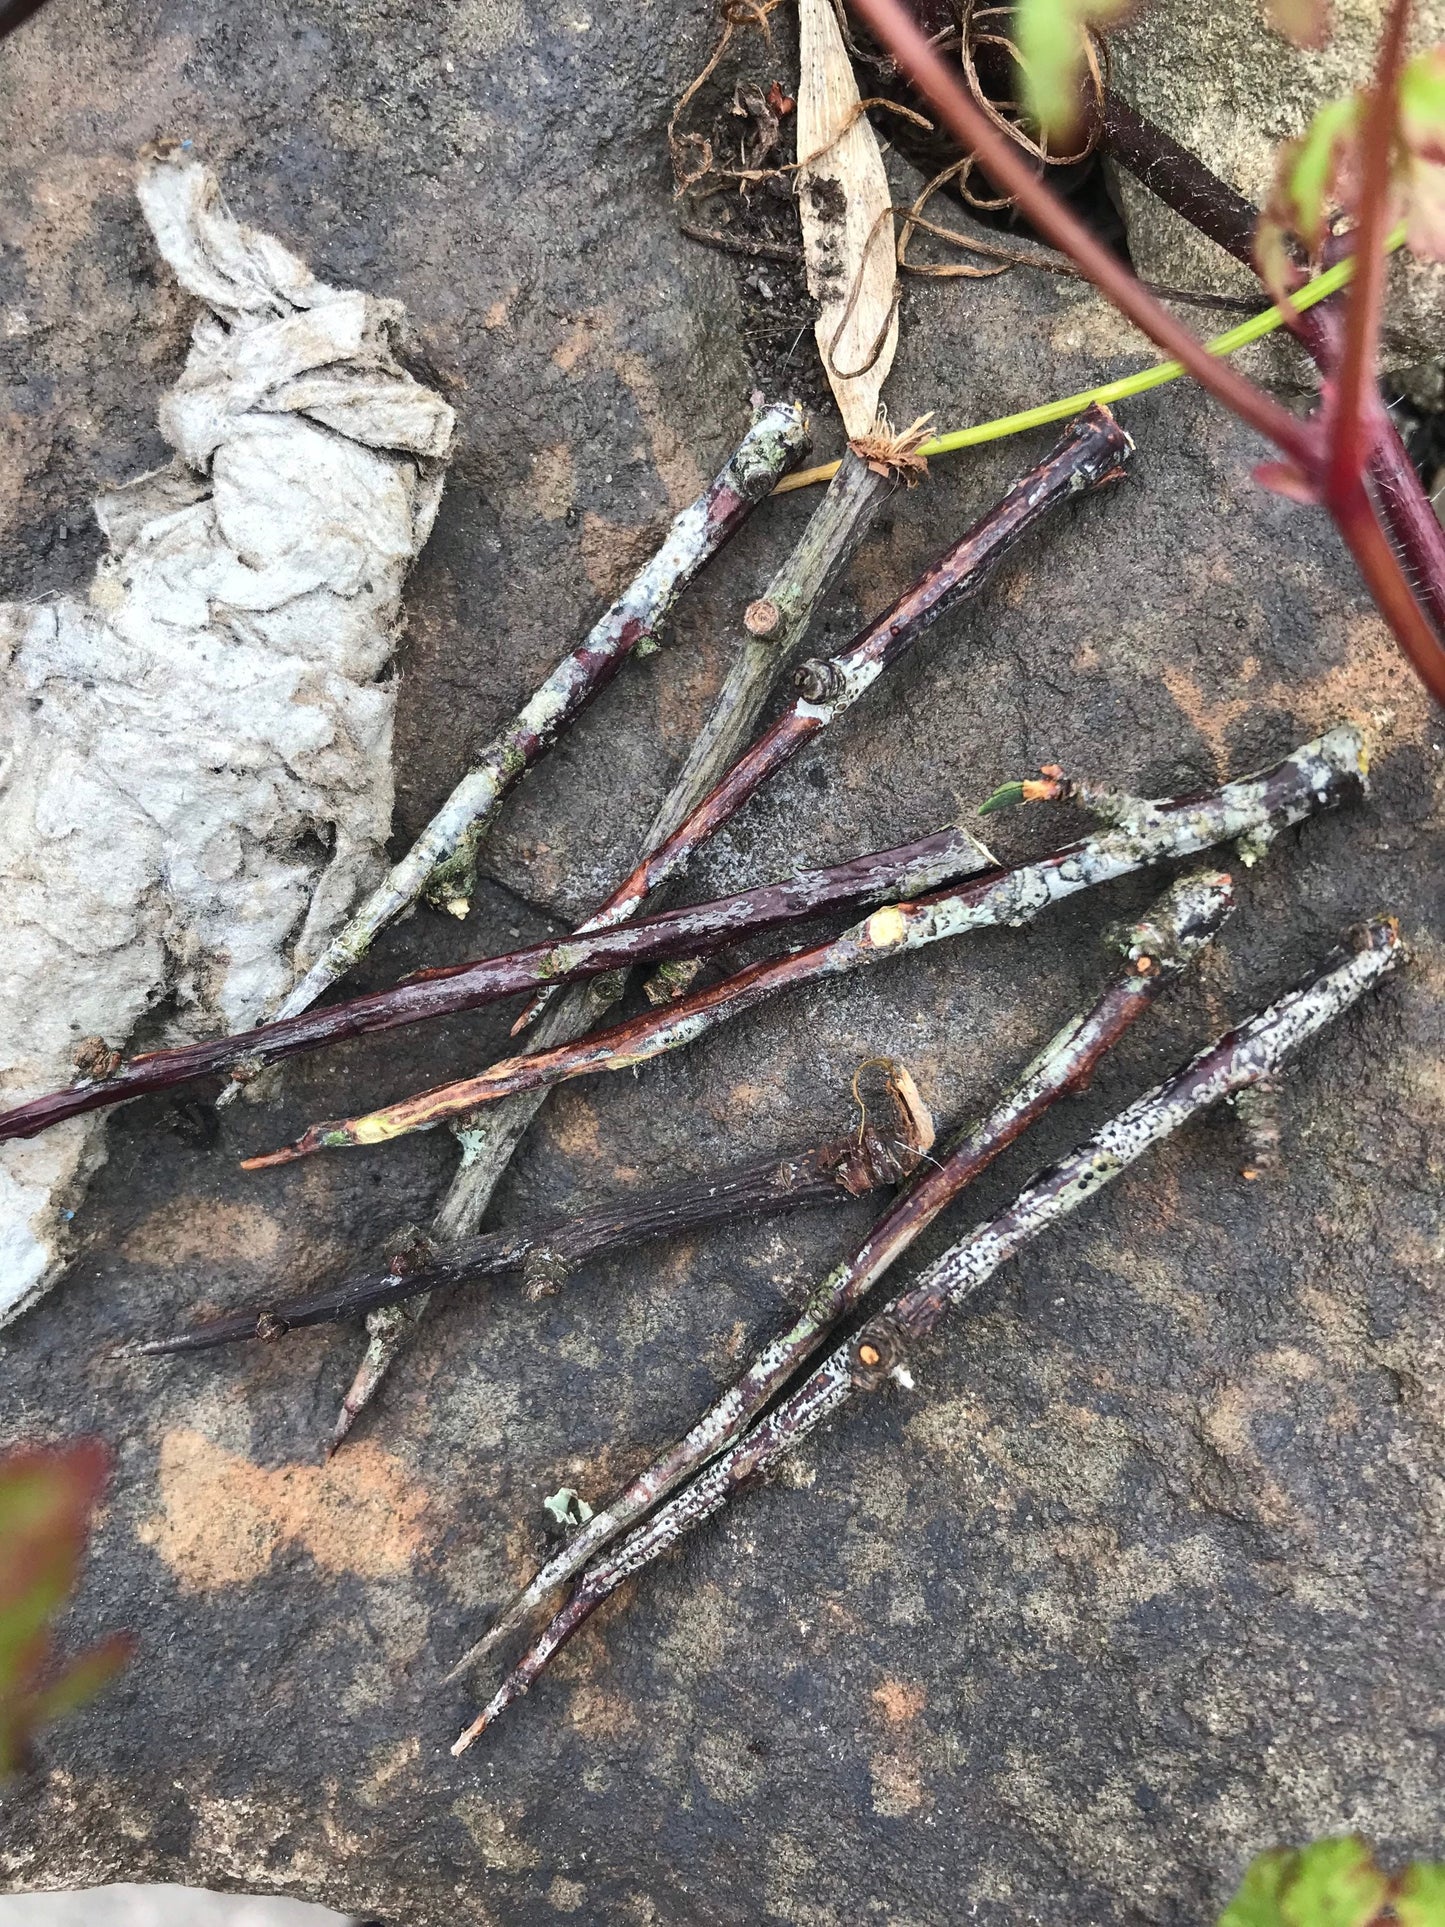 Blackthorn needles